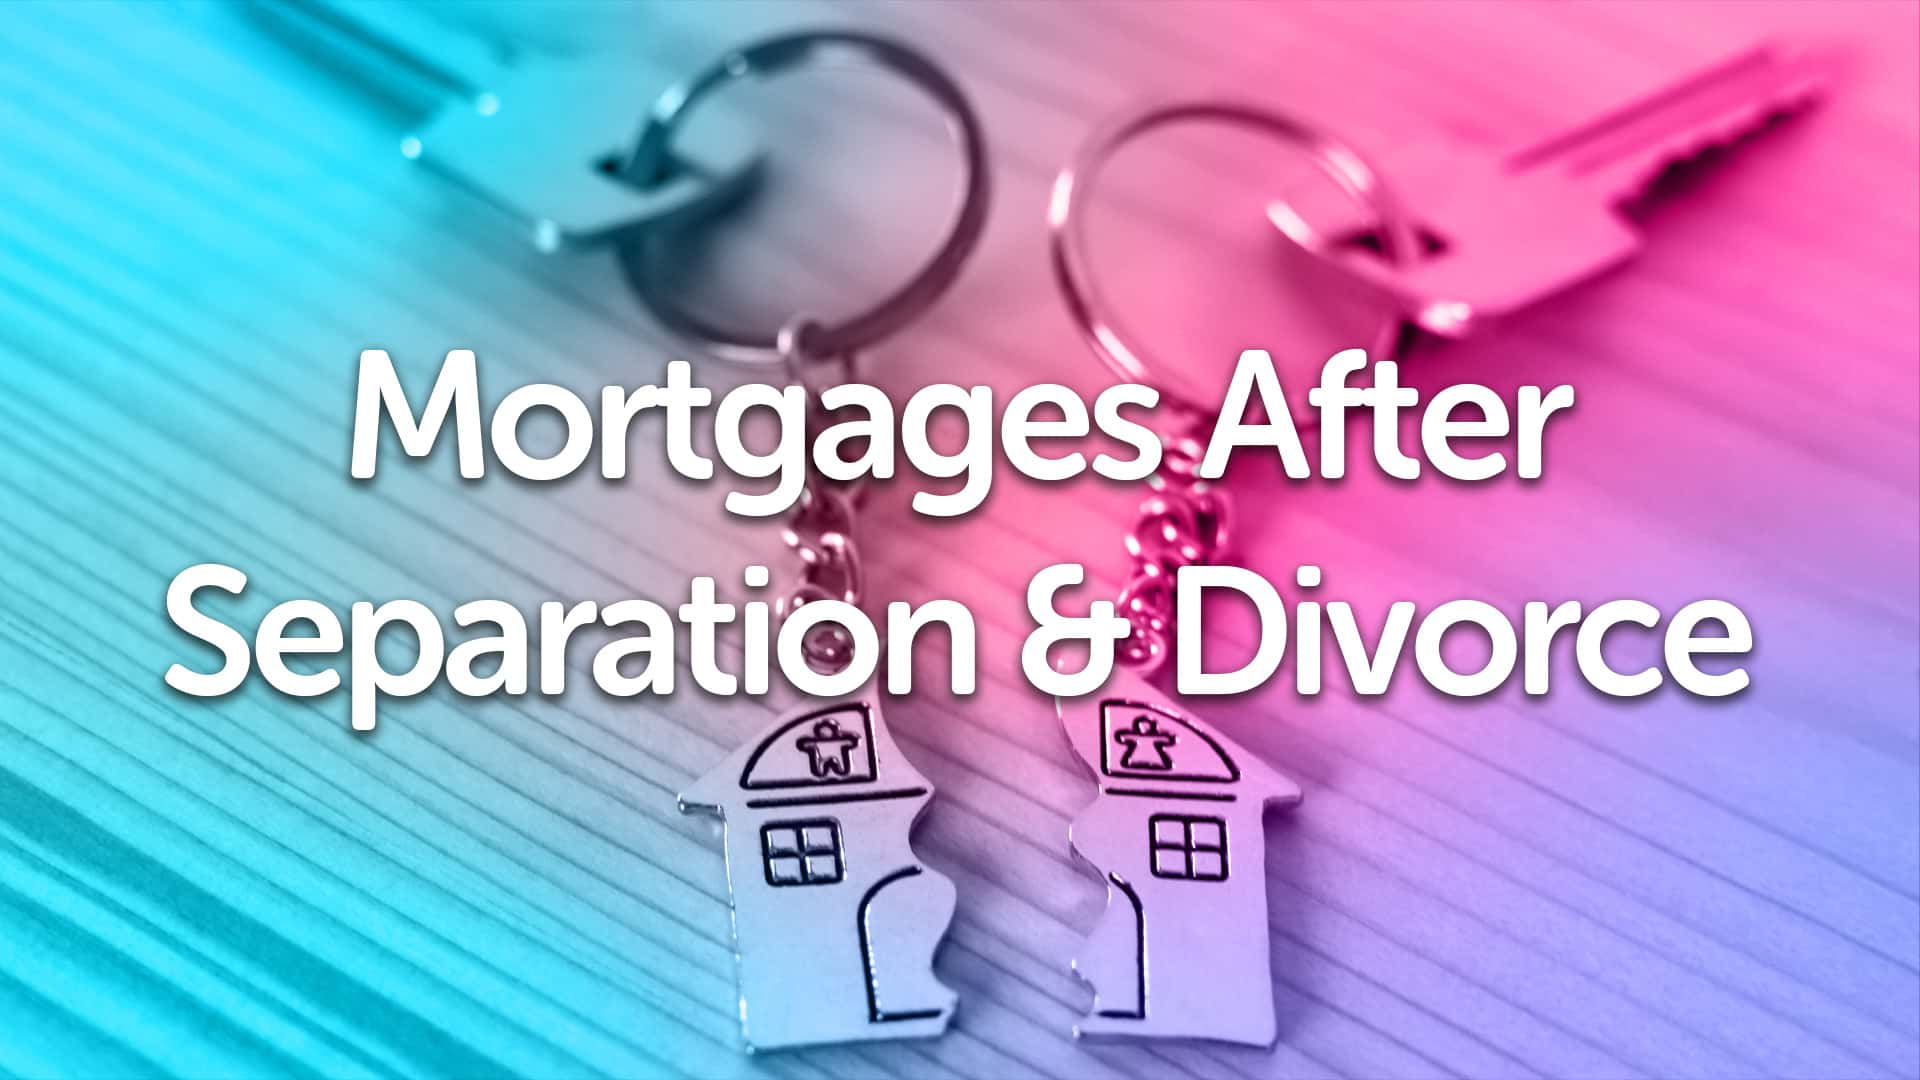 Divorce & Separation Mortgage Advice in Nottingham